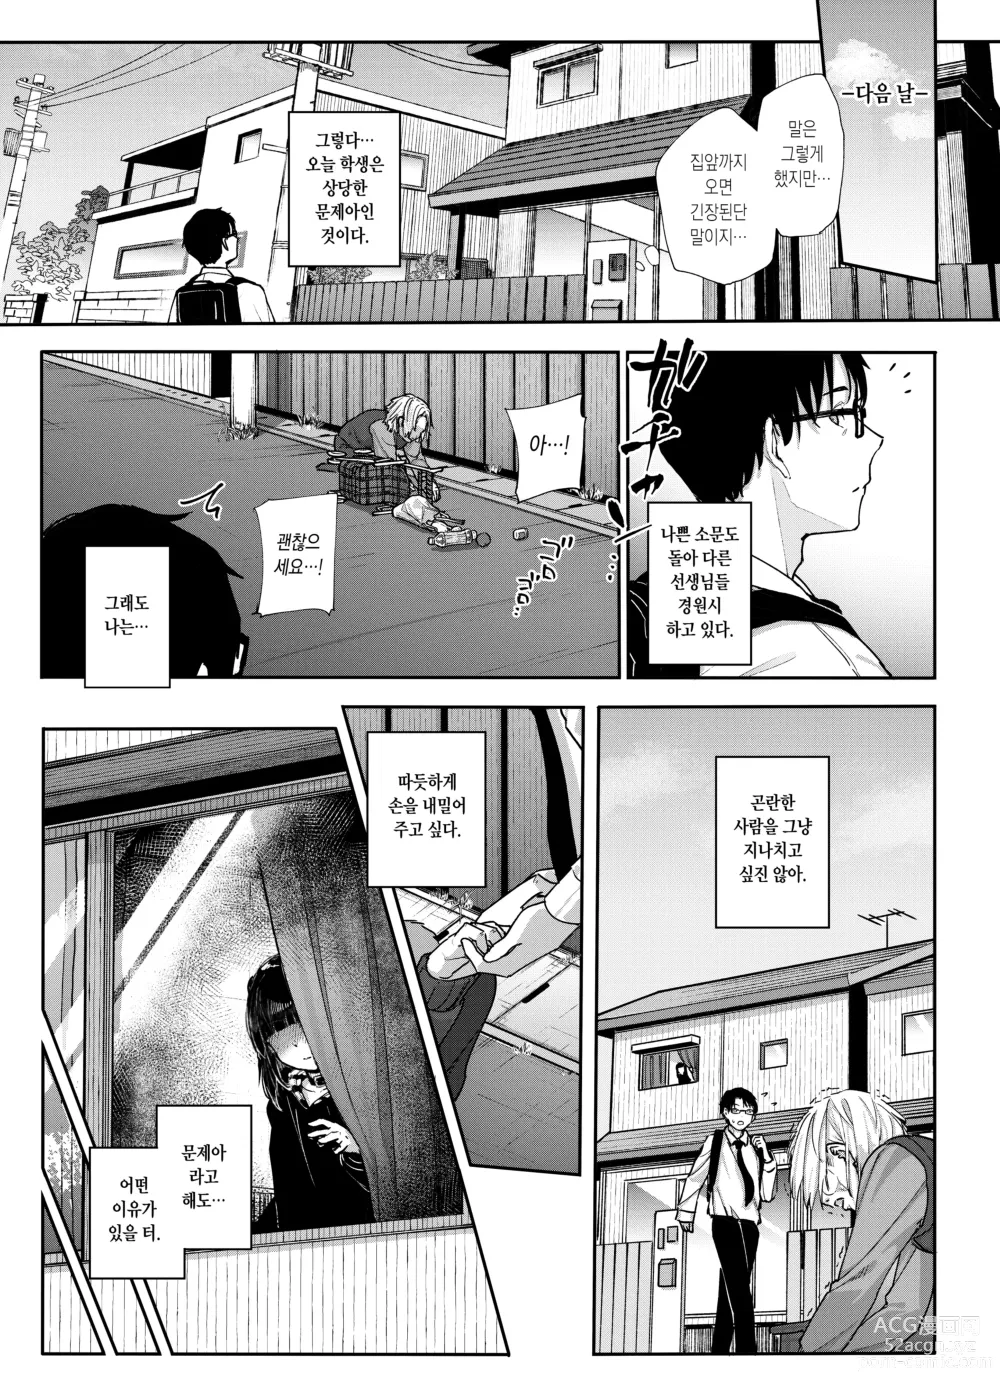 Page 5 of doujinshi 성실하기만 한 내가 파멸을 바라는 학생의 성벽을 망가뜨린 이야기 ~그래서 나는 가정교사를 그만뒀다~